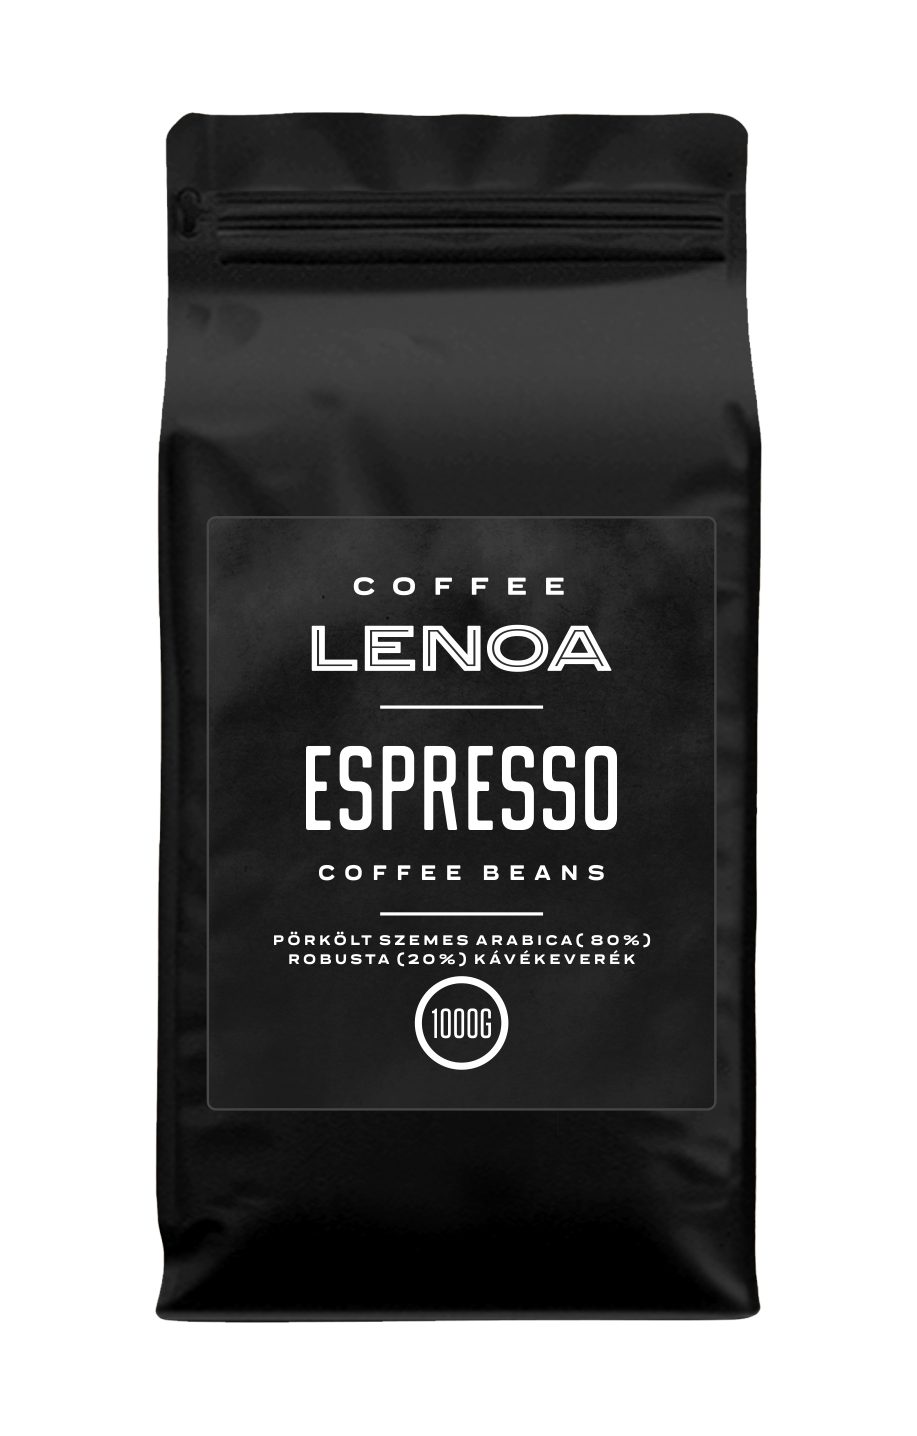 Coffee LENOA - ESPRESSO coffee beans